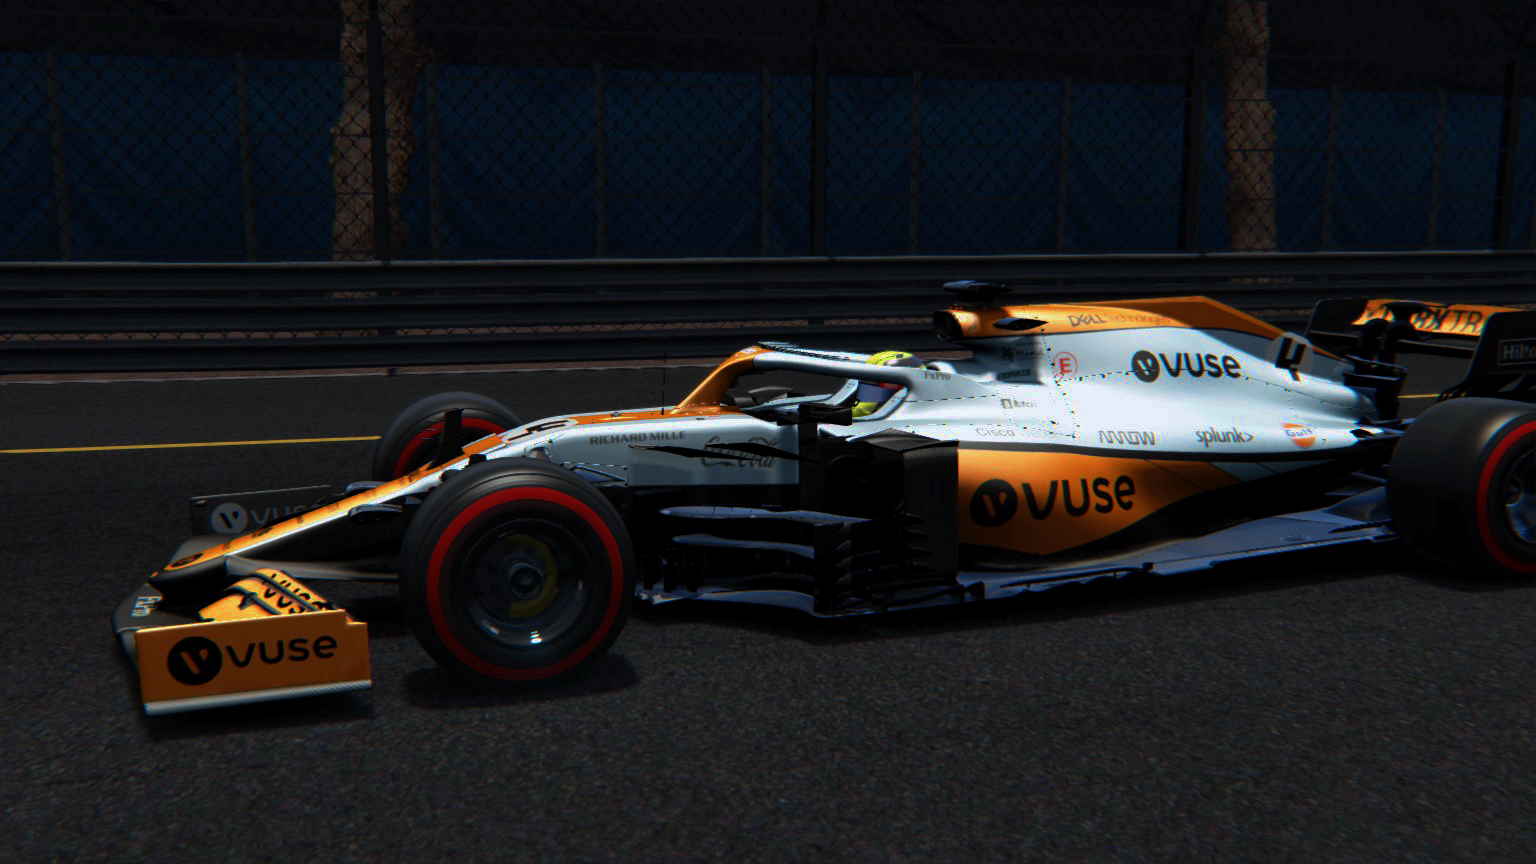 McLaren's one off Gulf livery at Monaco